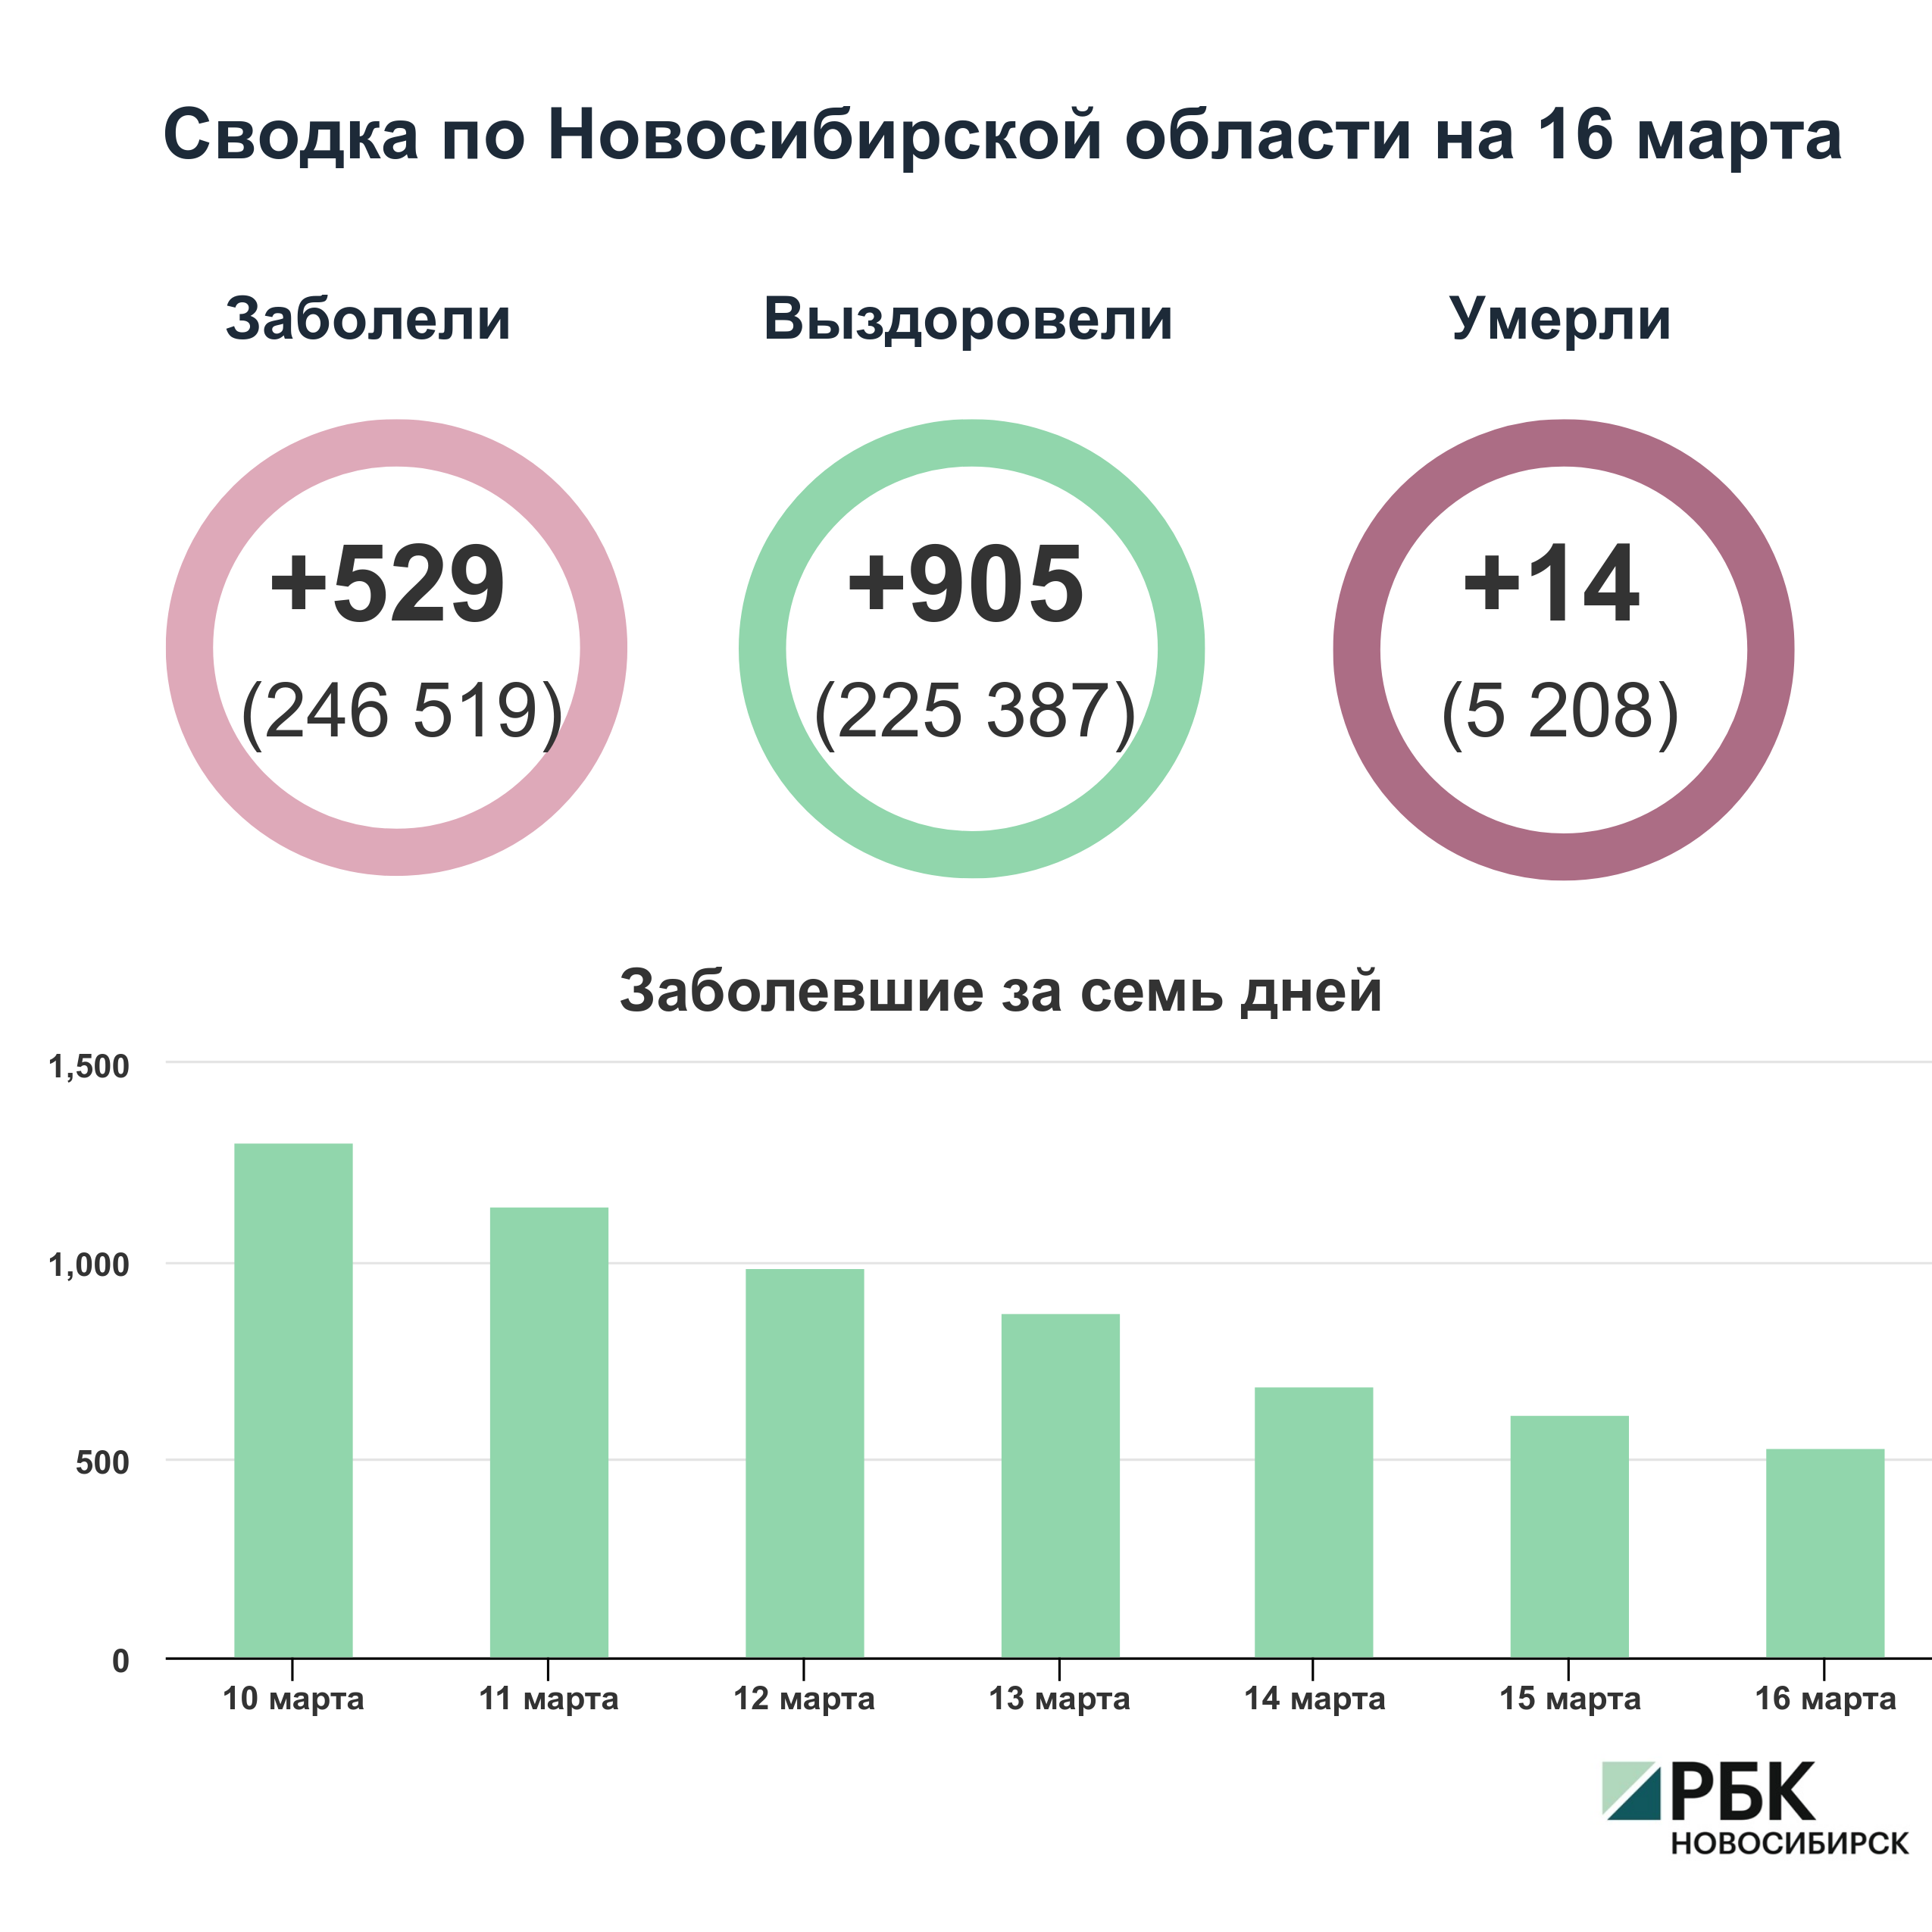 Коронавирус в Новосибирске: сводка на 16 марта